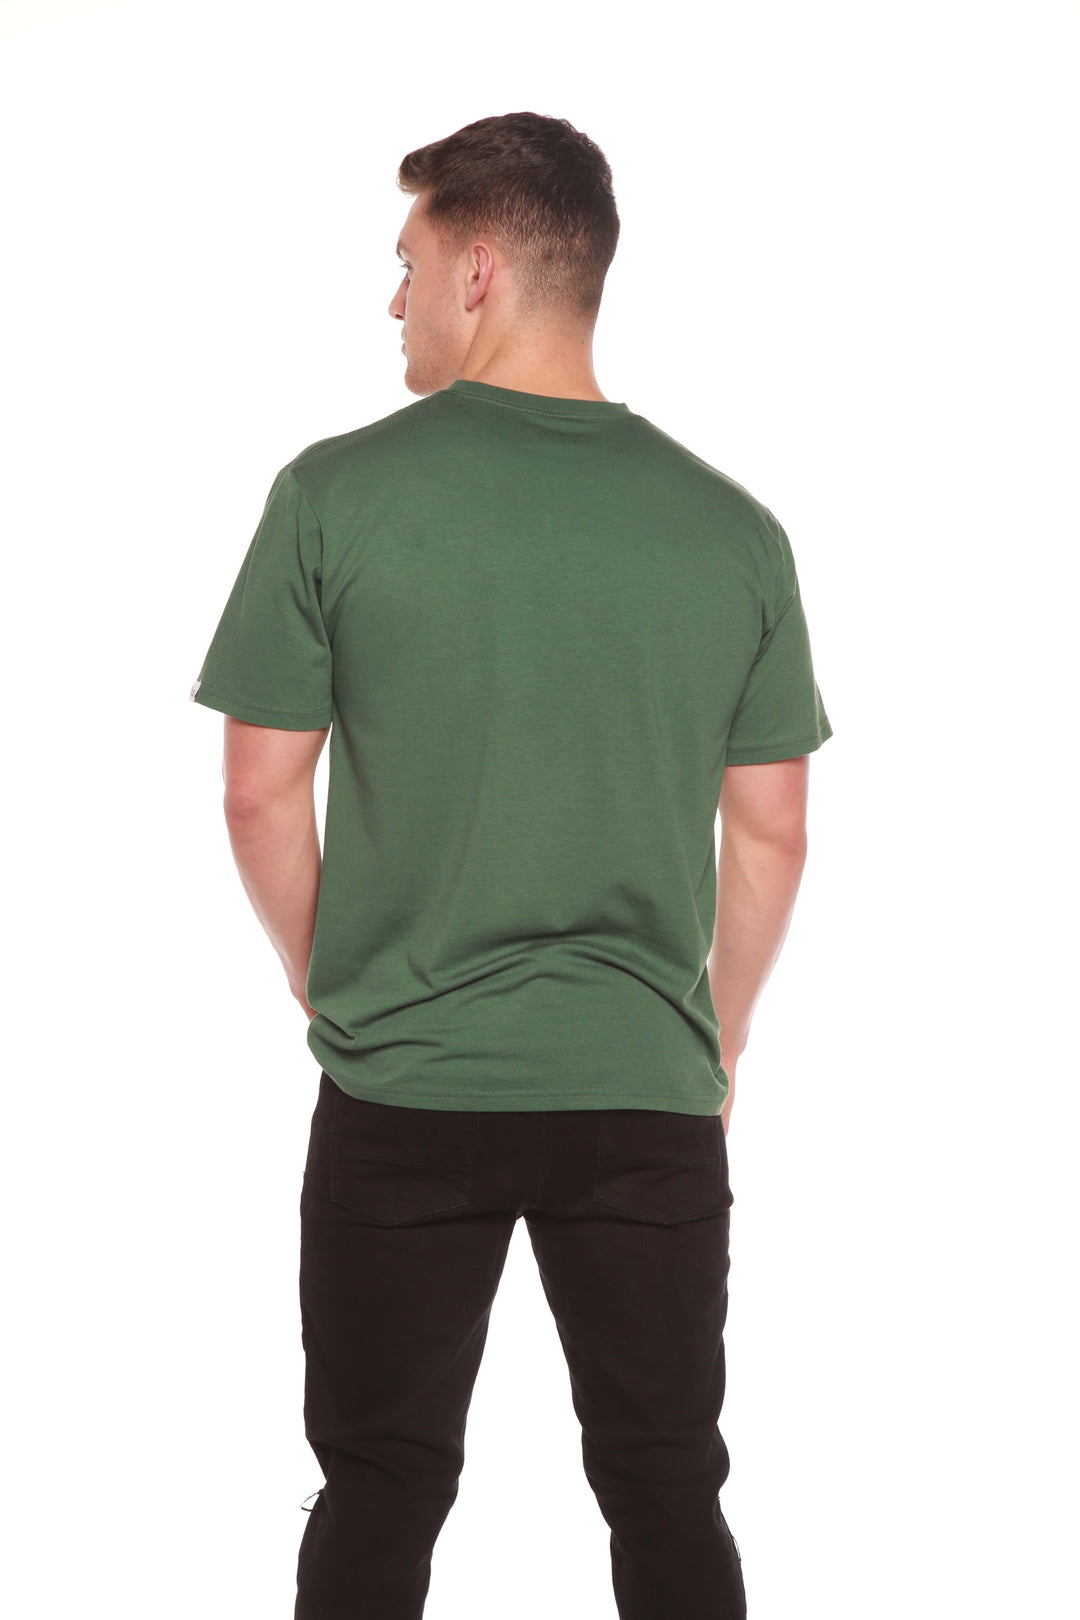 Men's Bamboo Viscose/Organic Cotton Pocket T-Shirt